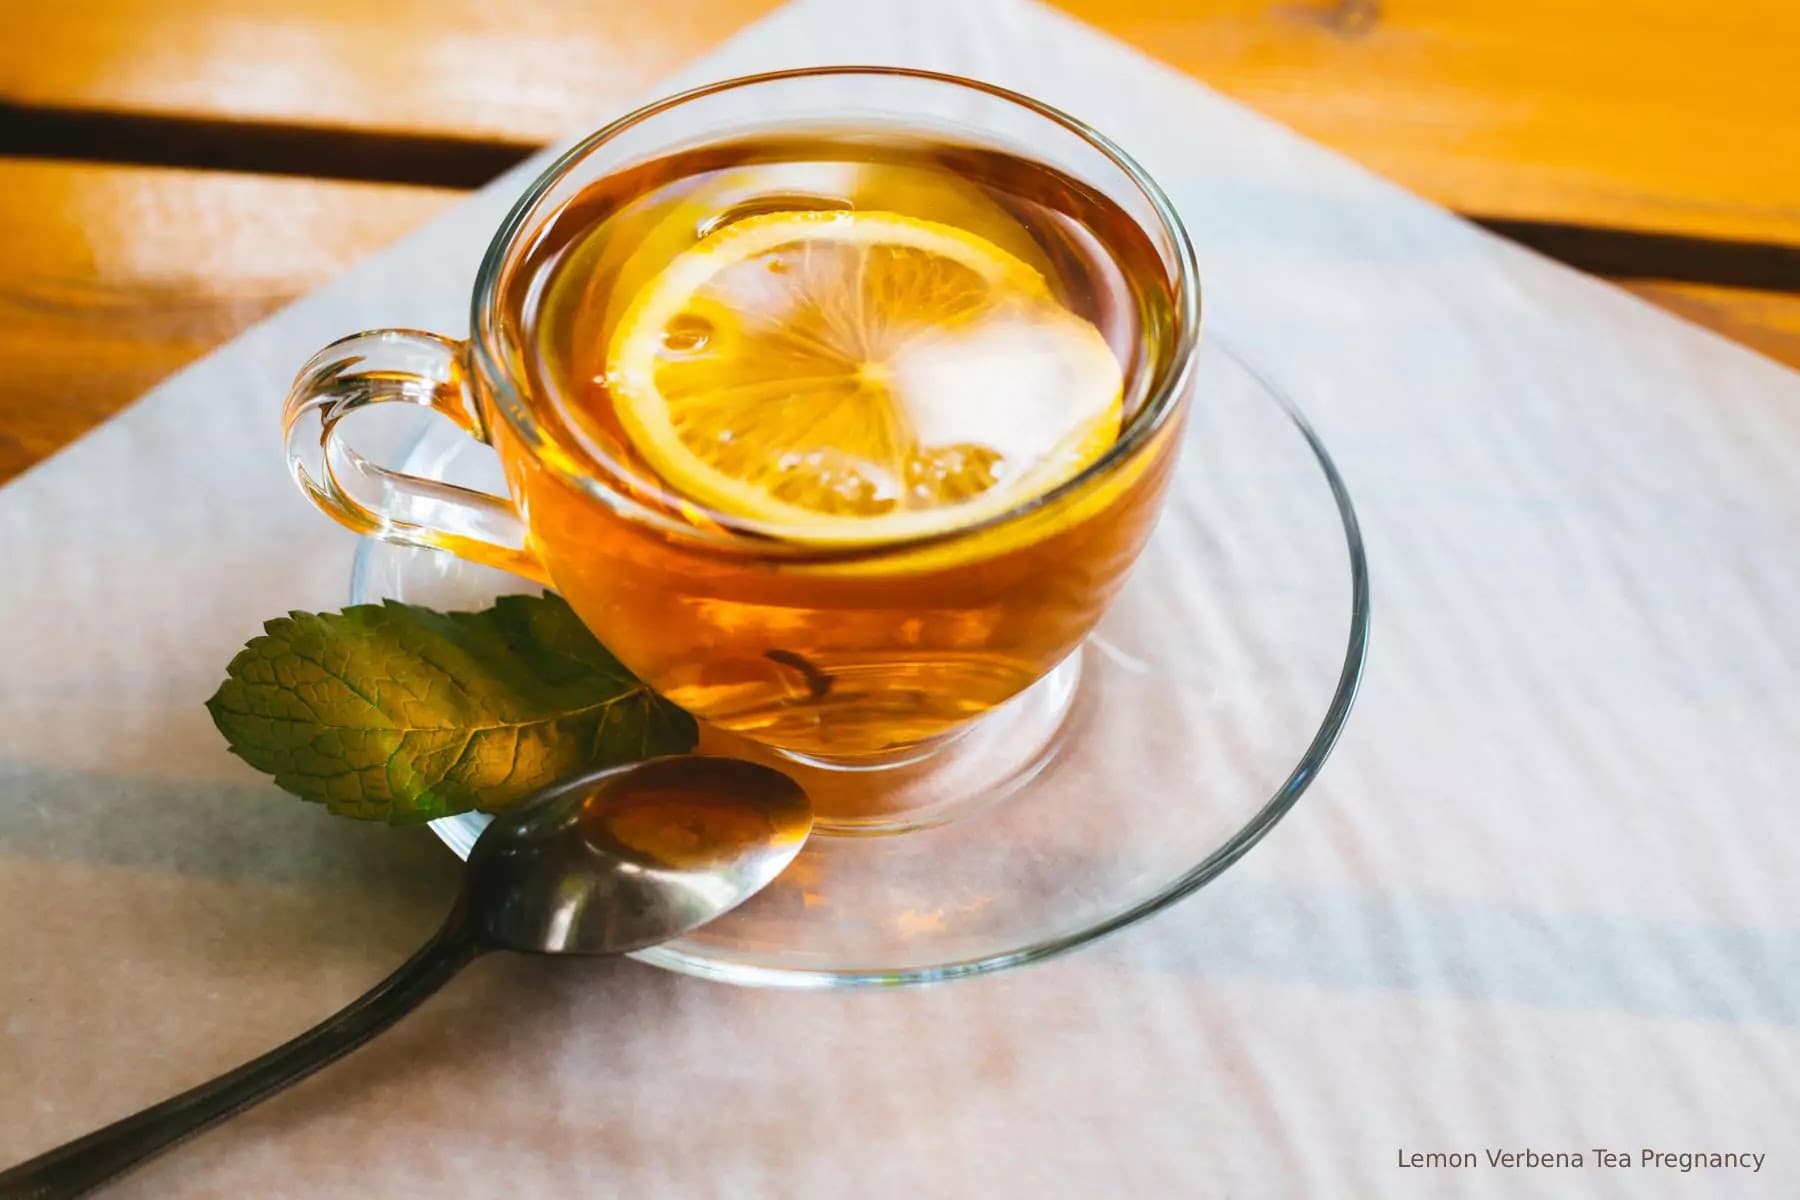 Lemon Verbena Tea Pregnancy - Sipping Safely